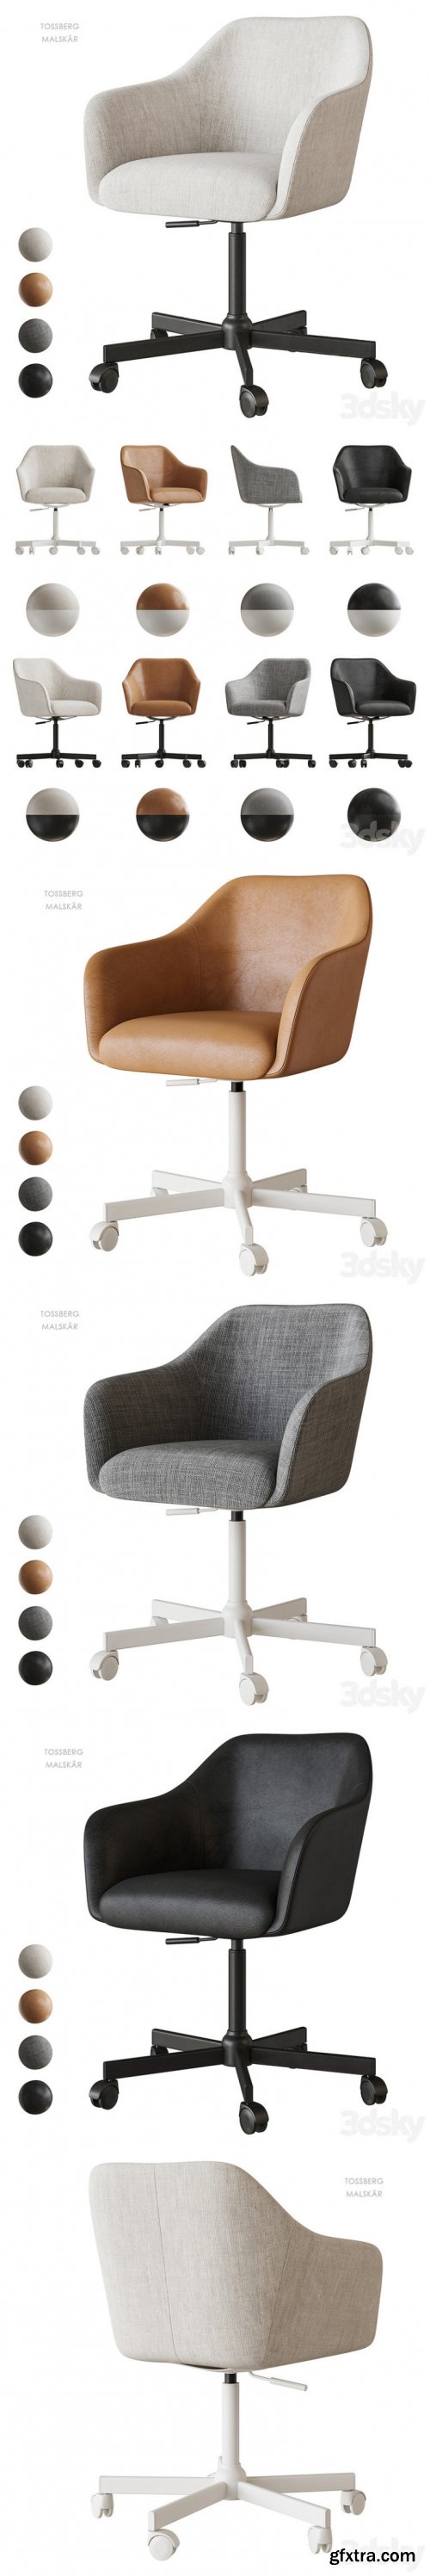 TOSSBERG IKEA Office chair